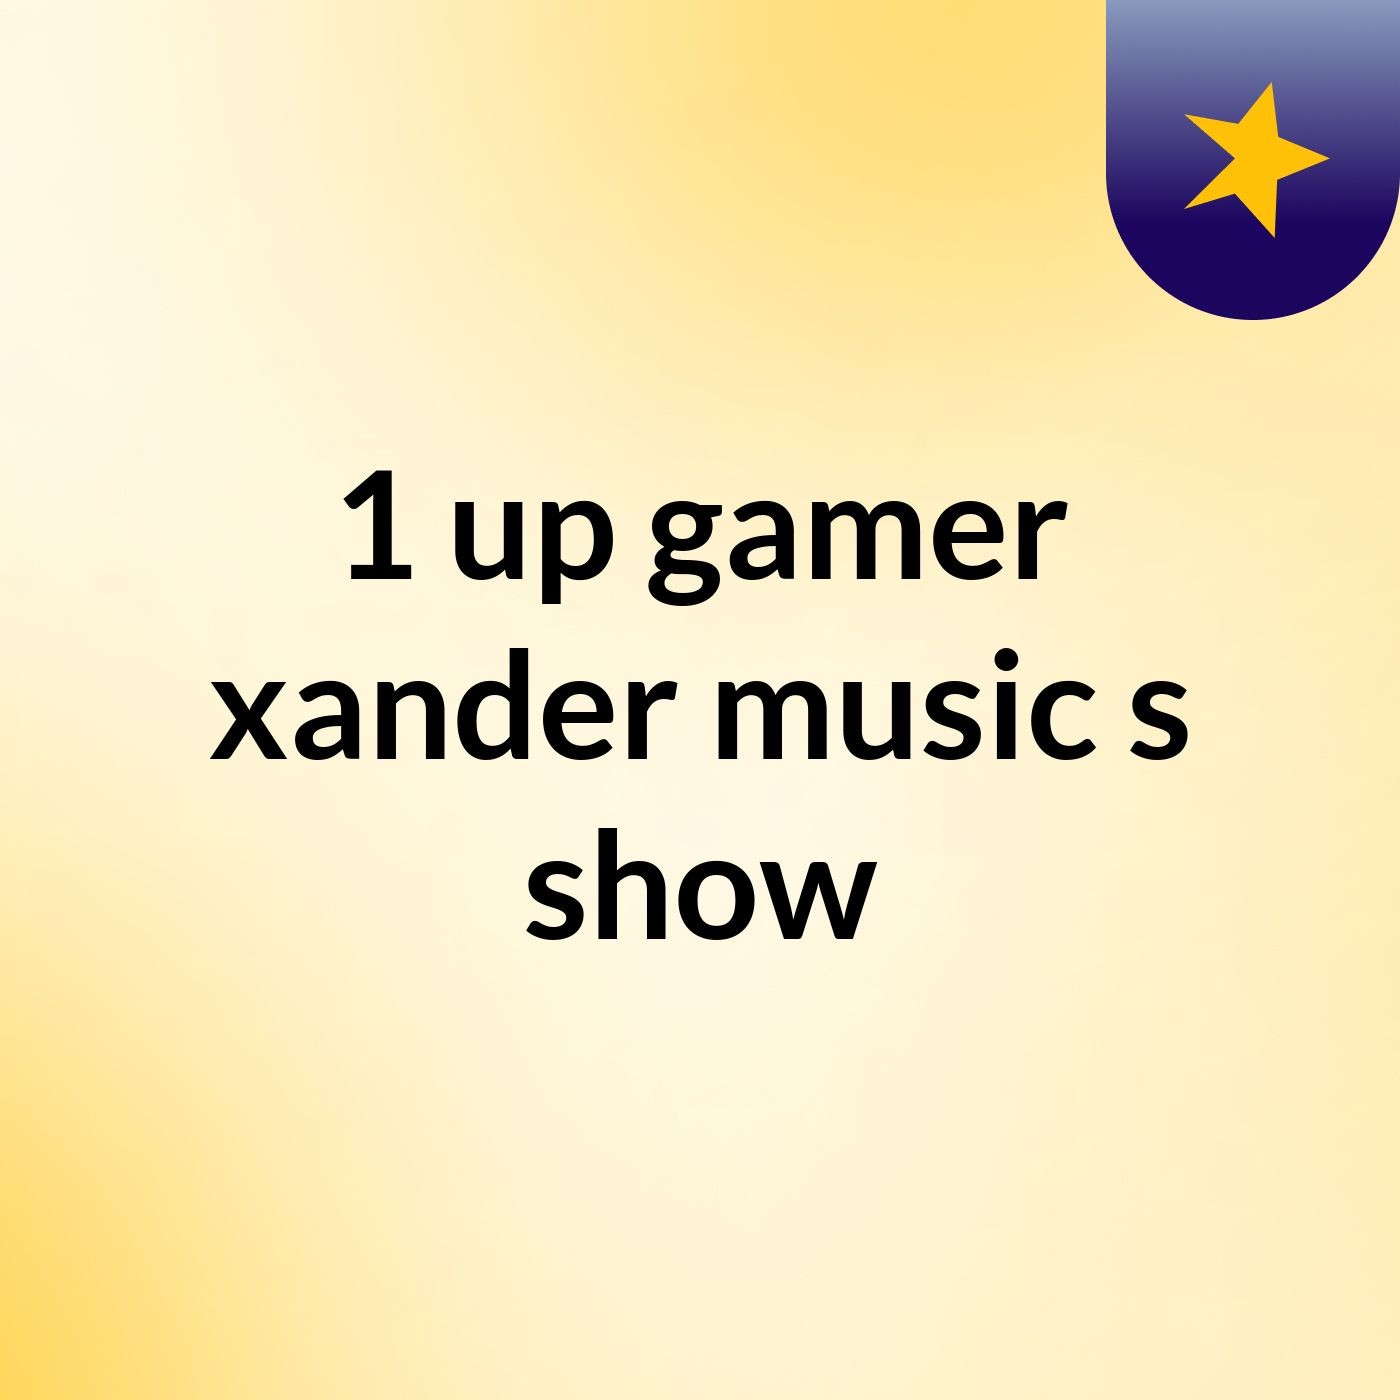 1 up gamer xander music's show